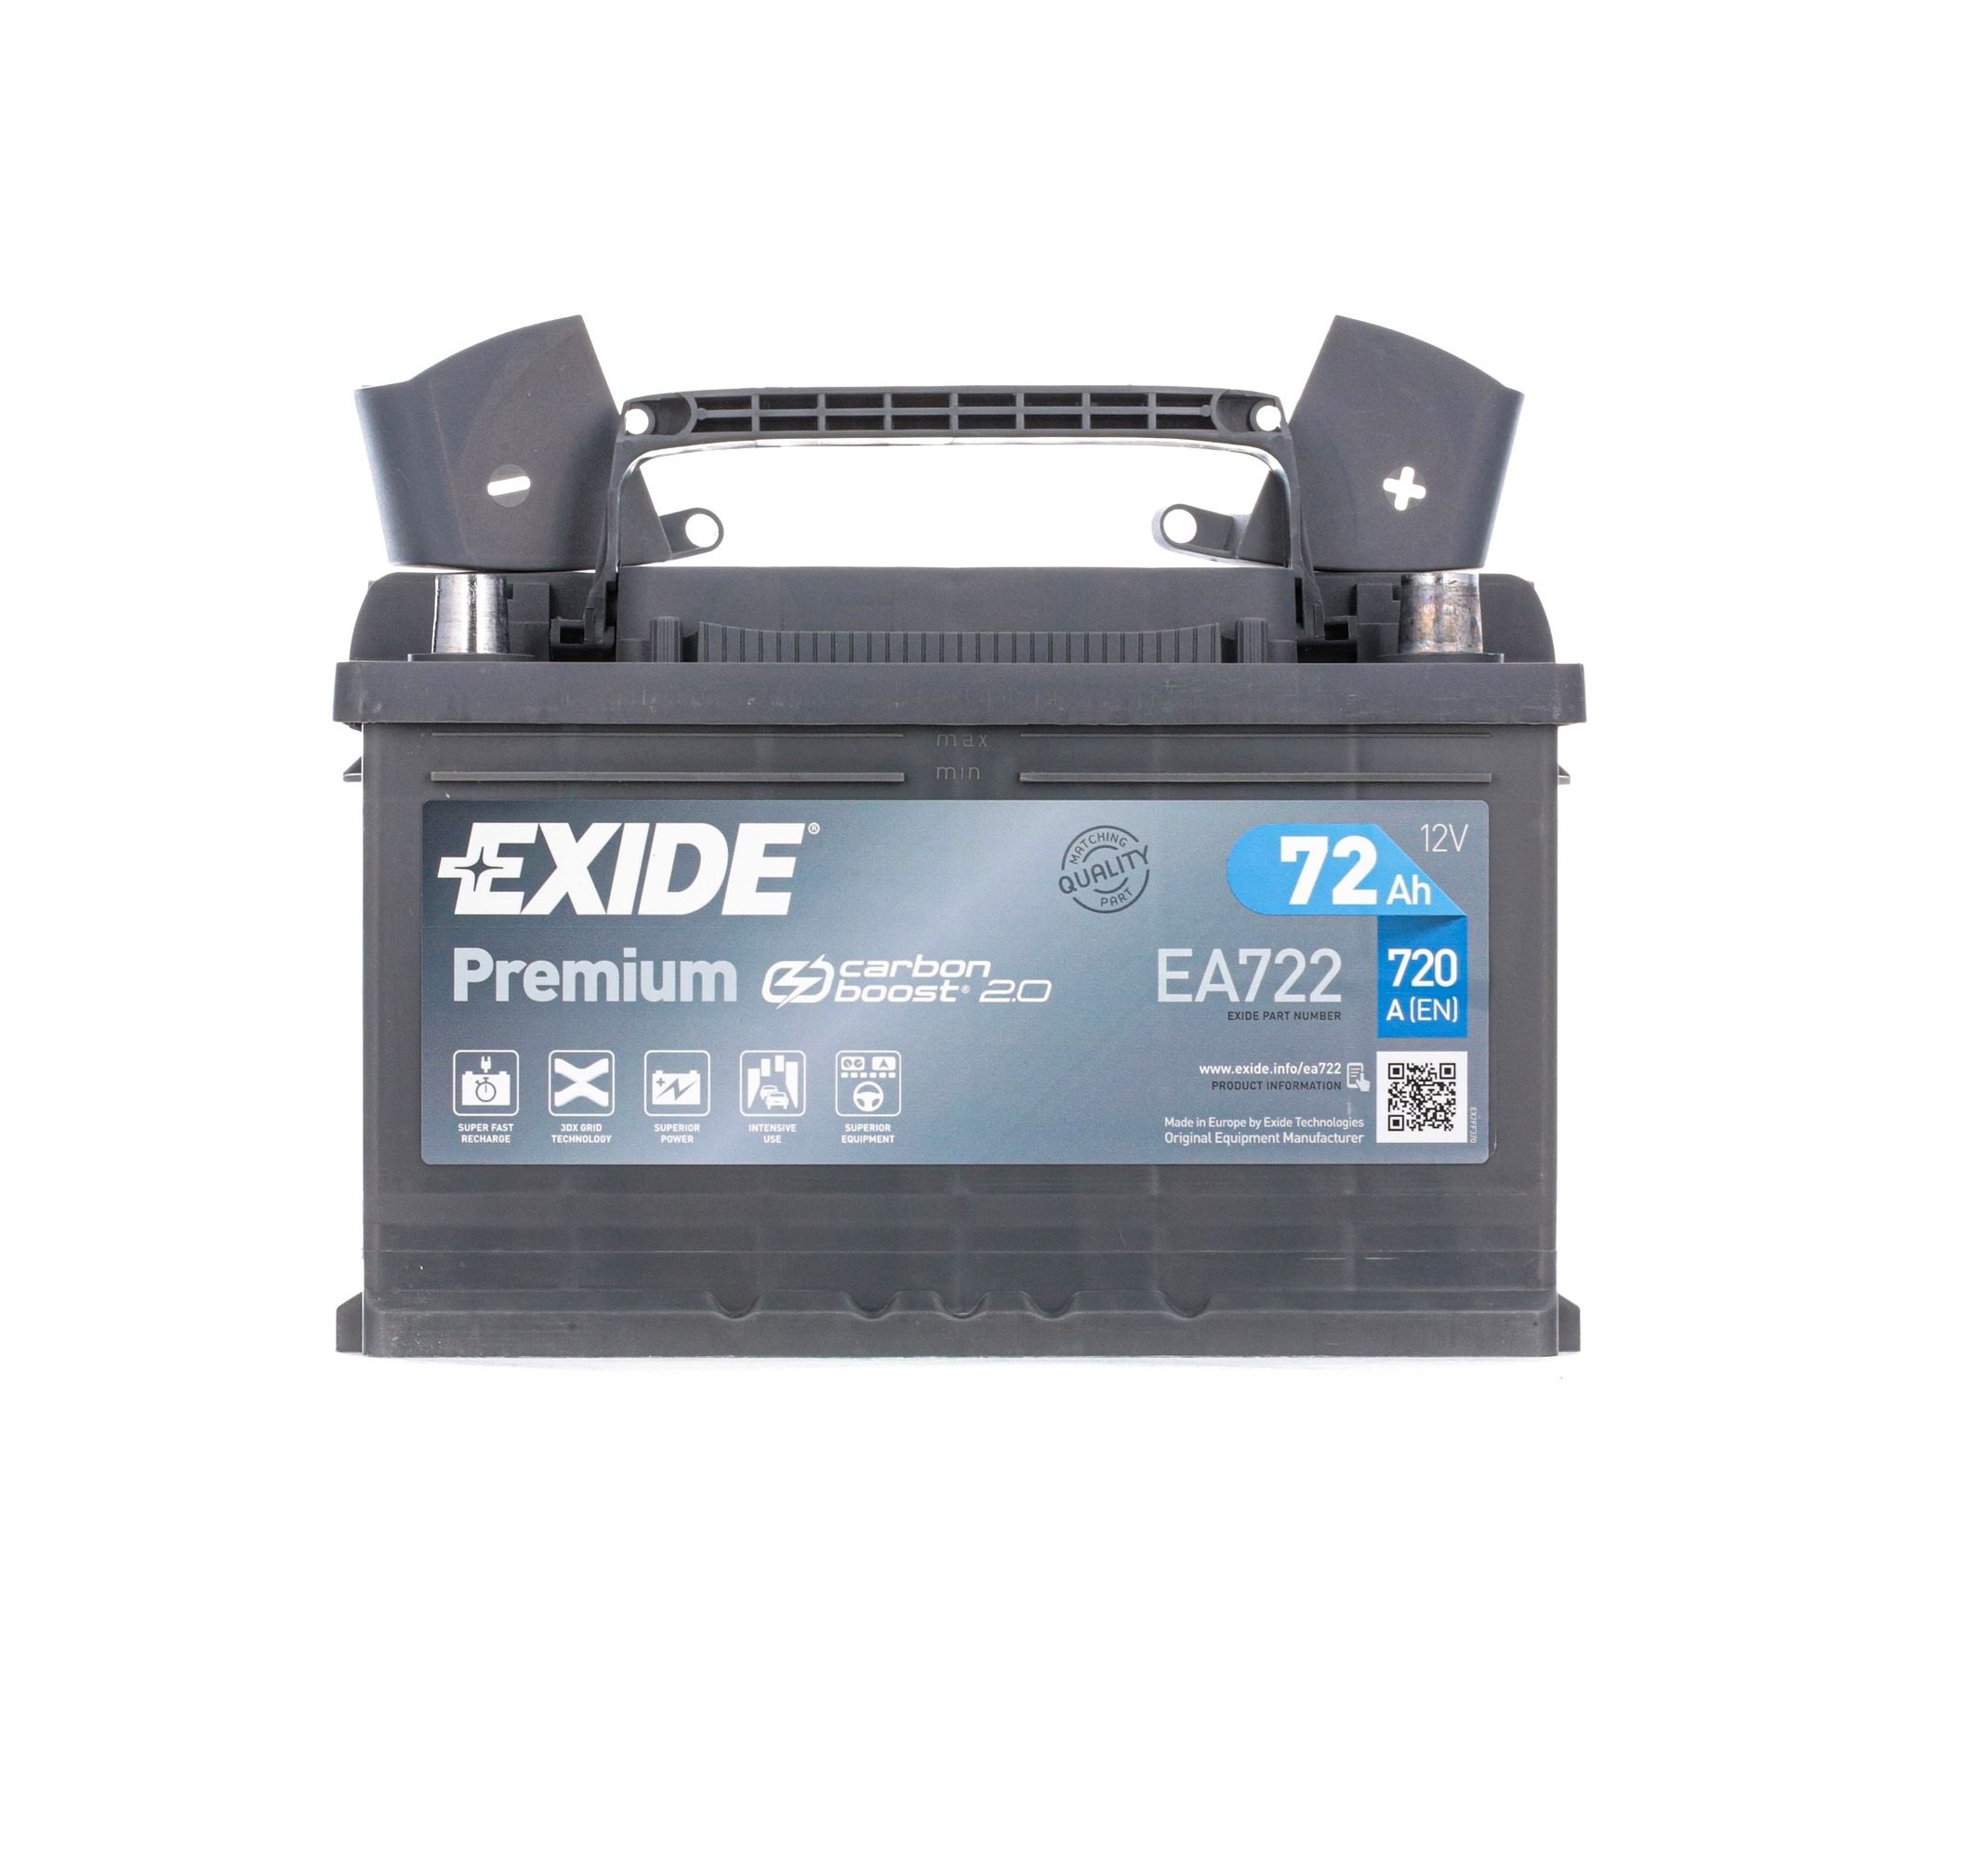 Batterie 57113GUG EXIDE EA722 - Kfz-Elektrik Teile für Jaguar bestellen